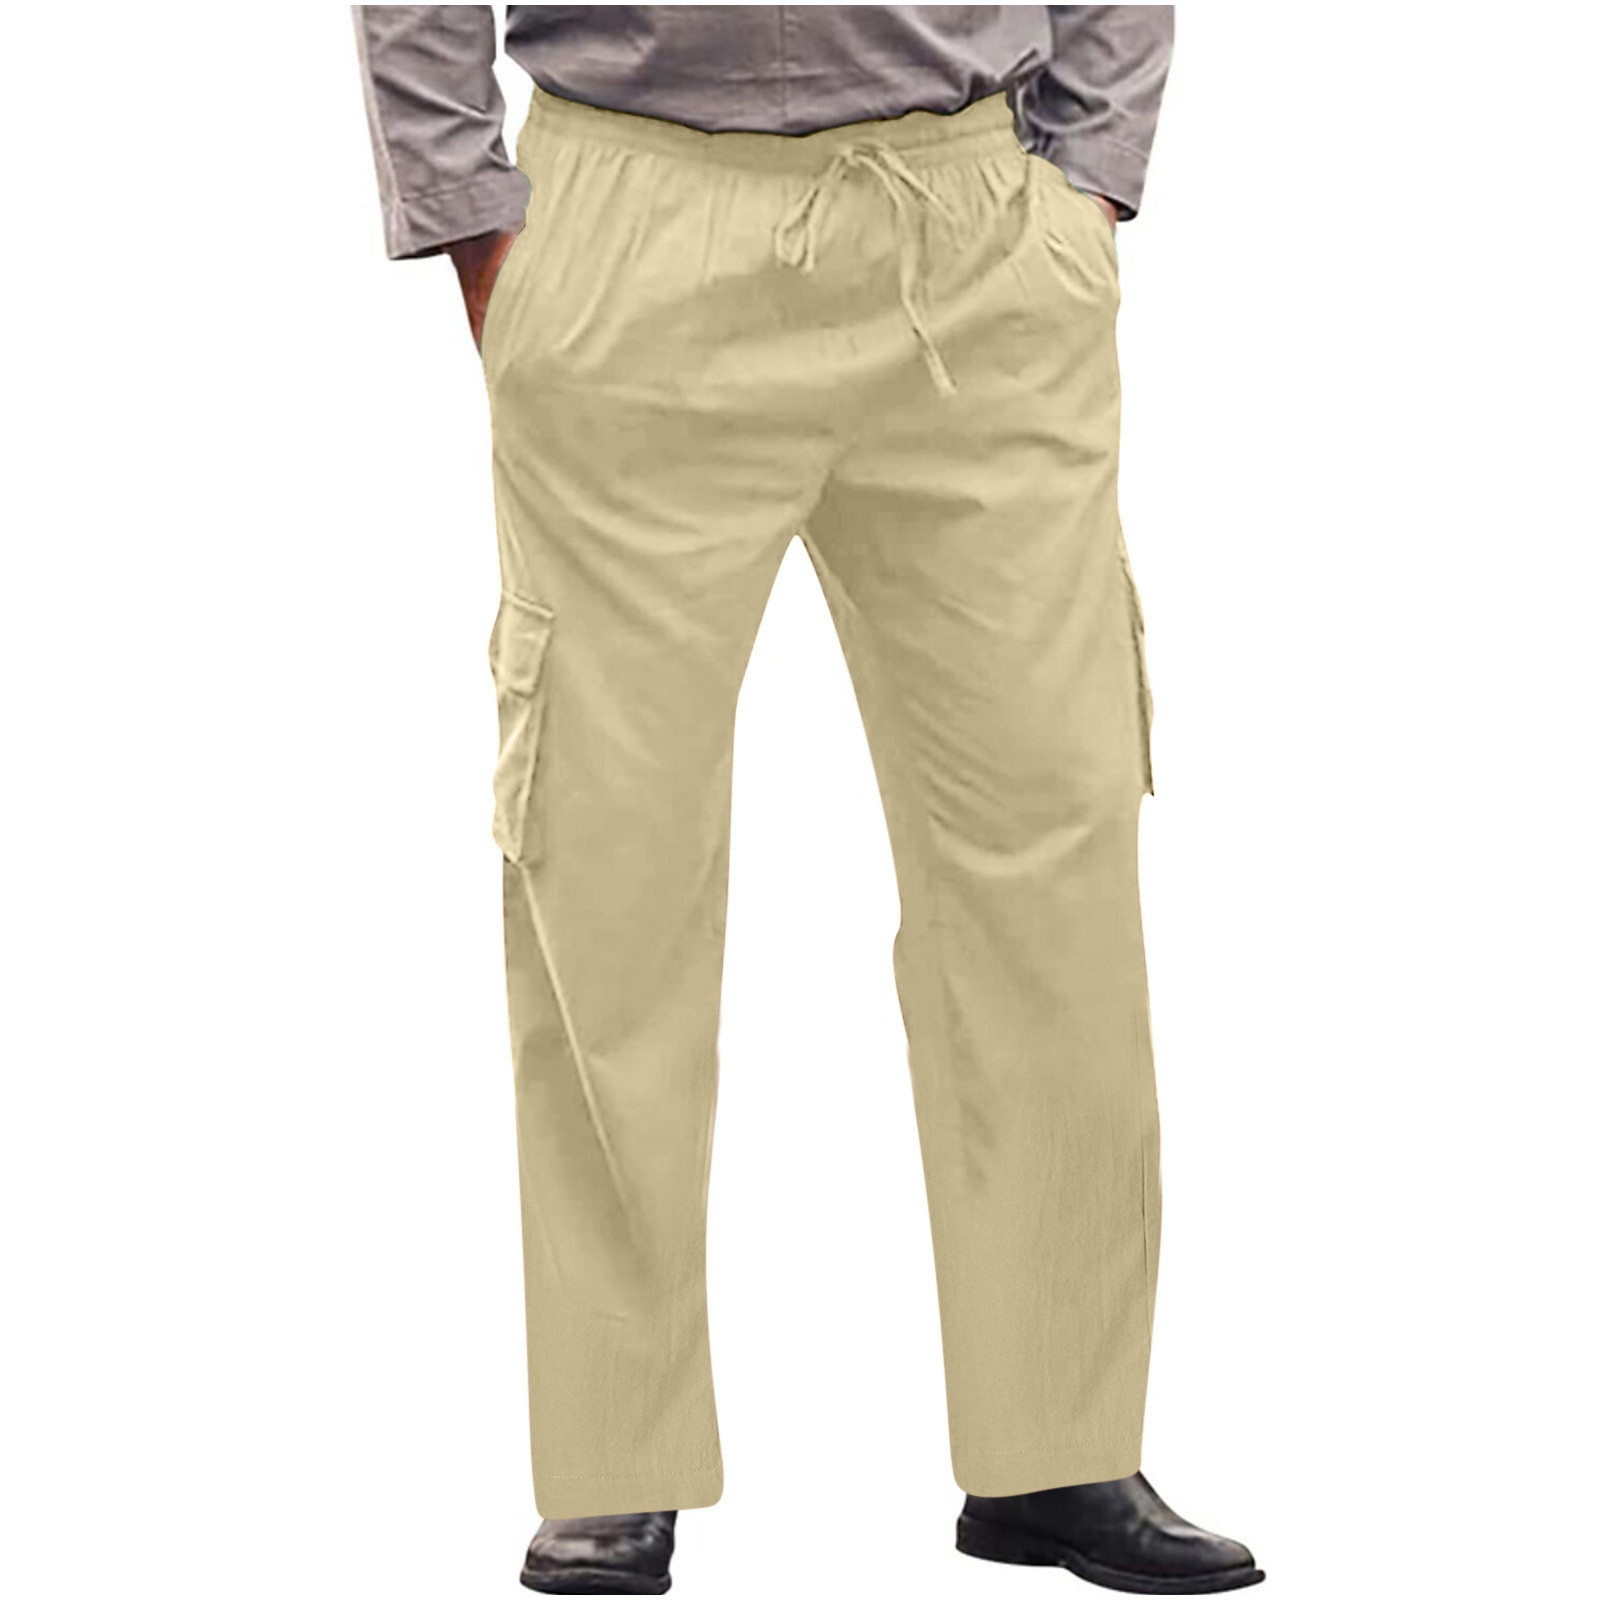 LONKITO Men's Casual Baggy Multi Pocket Pants Drawstring Elastic Waist ...